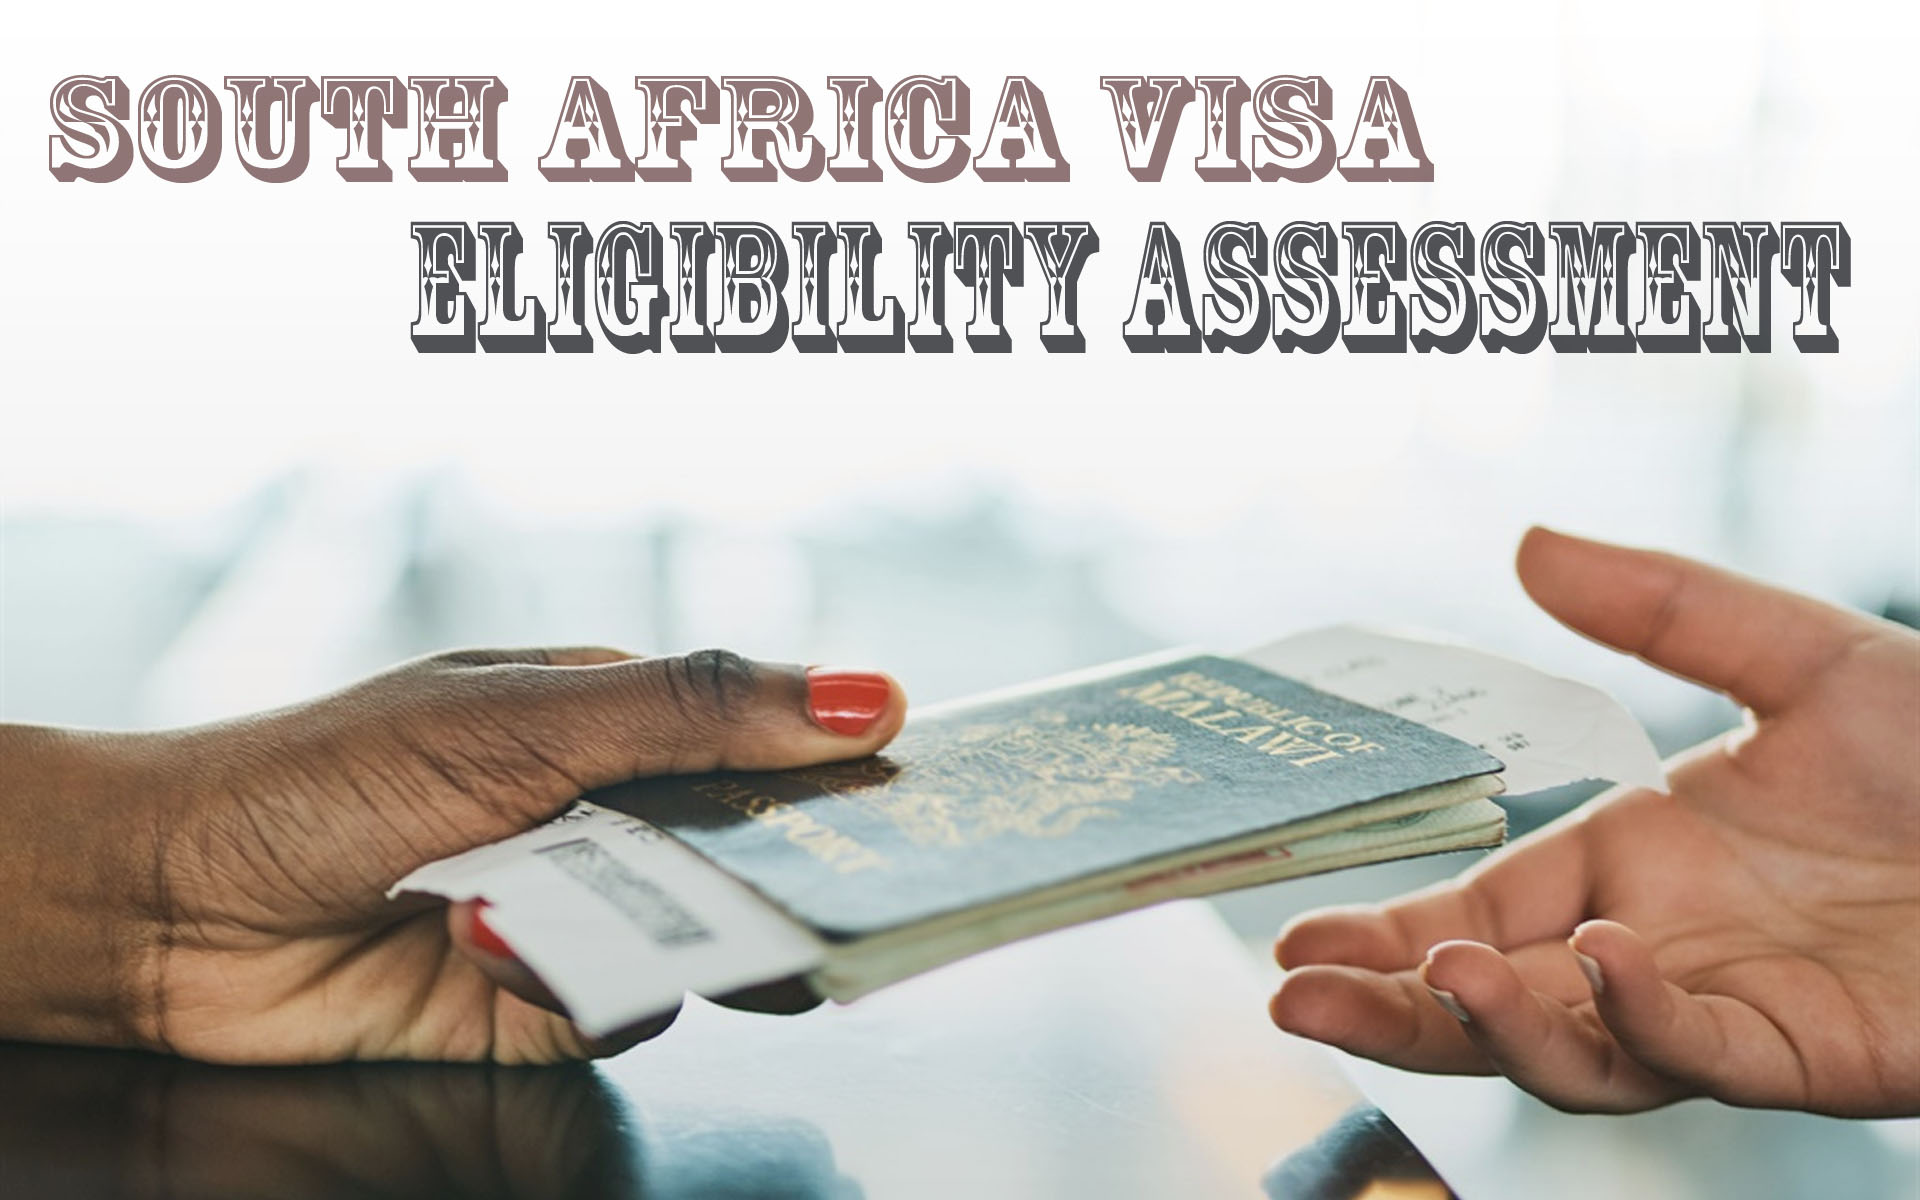 South Africa Visa Eligibility Assessment